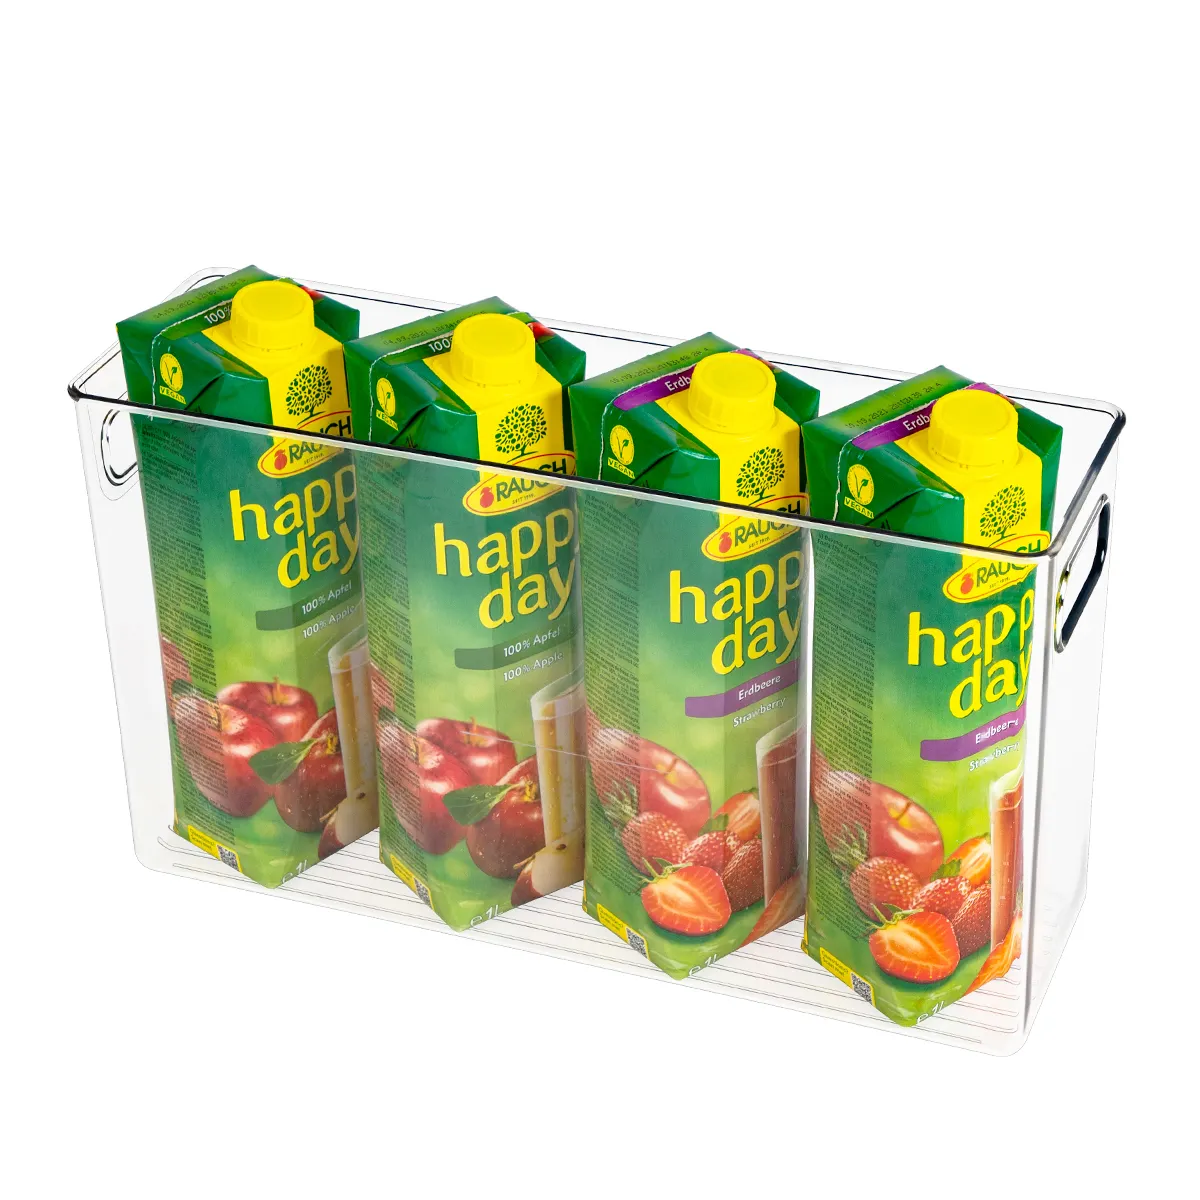 New product refrigerator plastic storage refrigerator plastic storage used to organizational bins